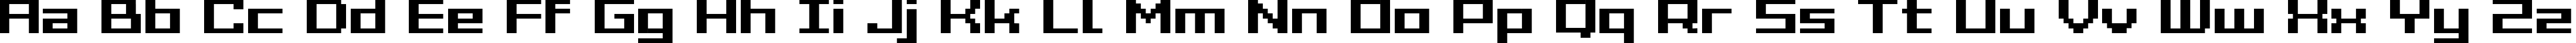 Пример написания английского алфавита шрифтом Grixel Acme 7 Wide Bold